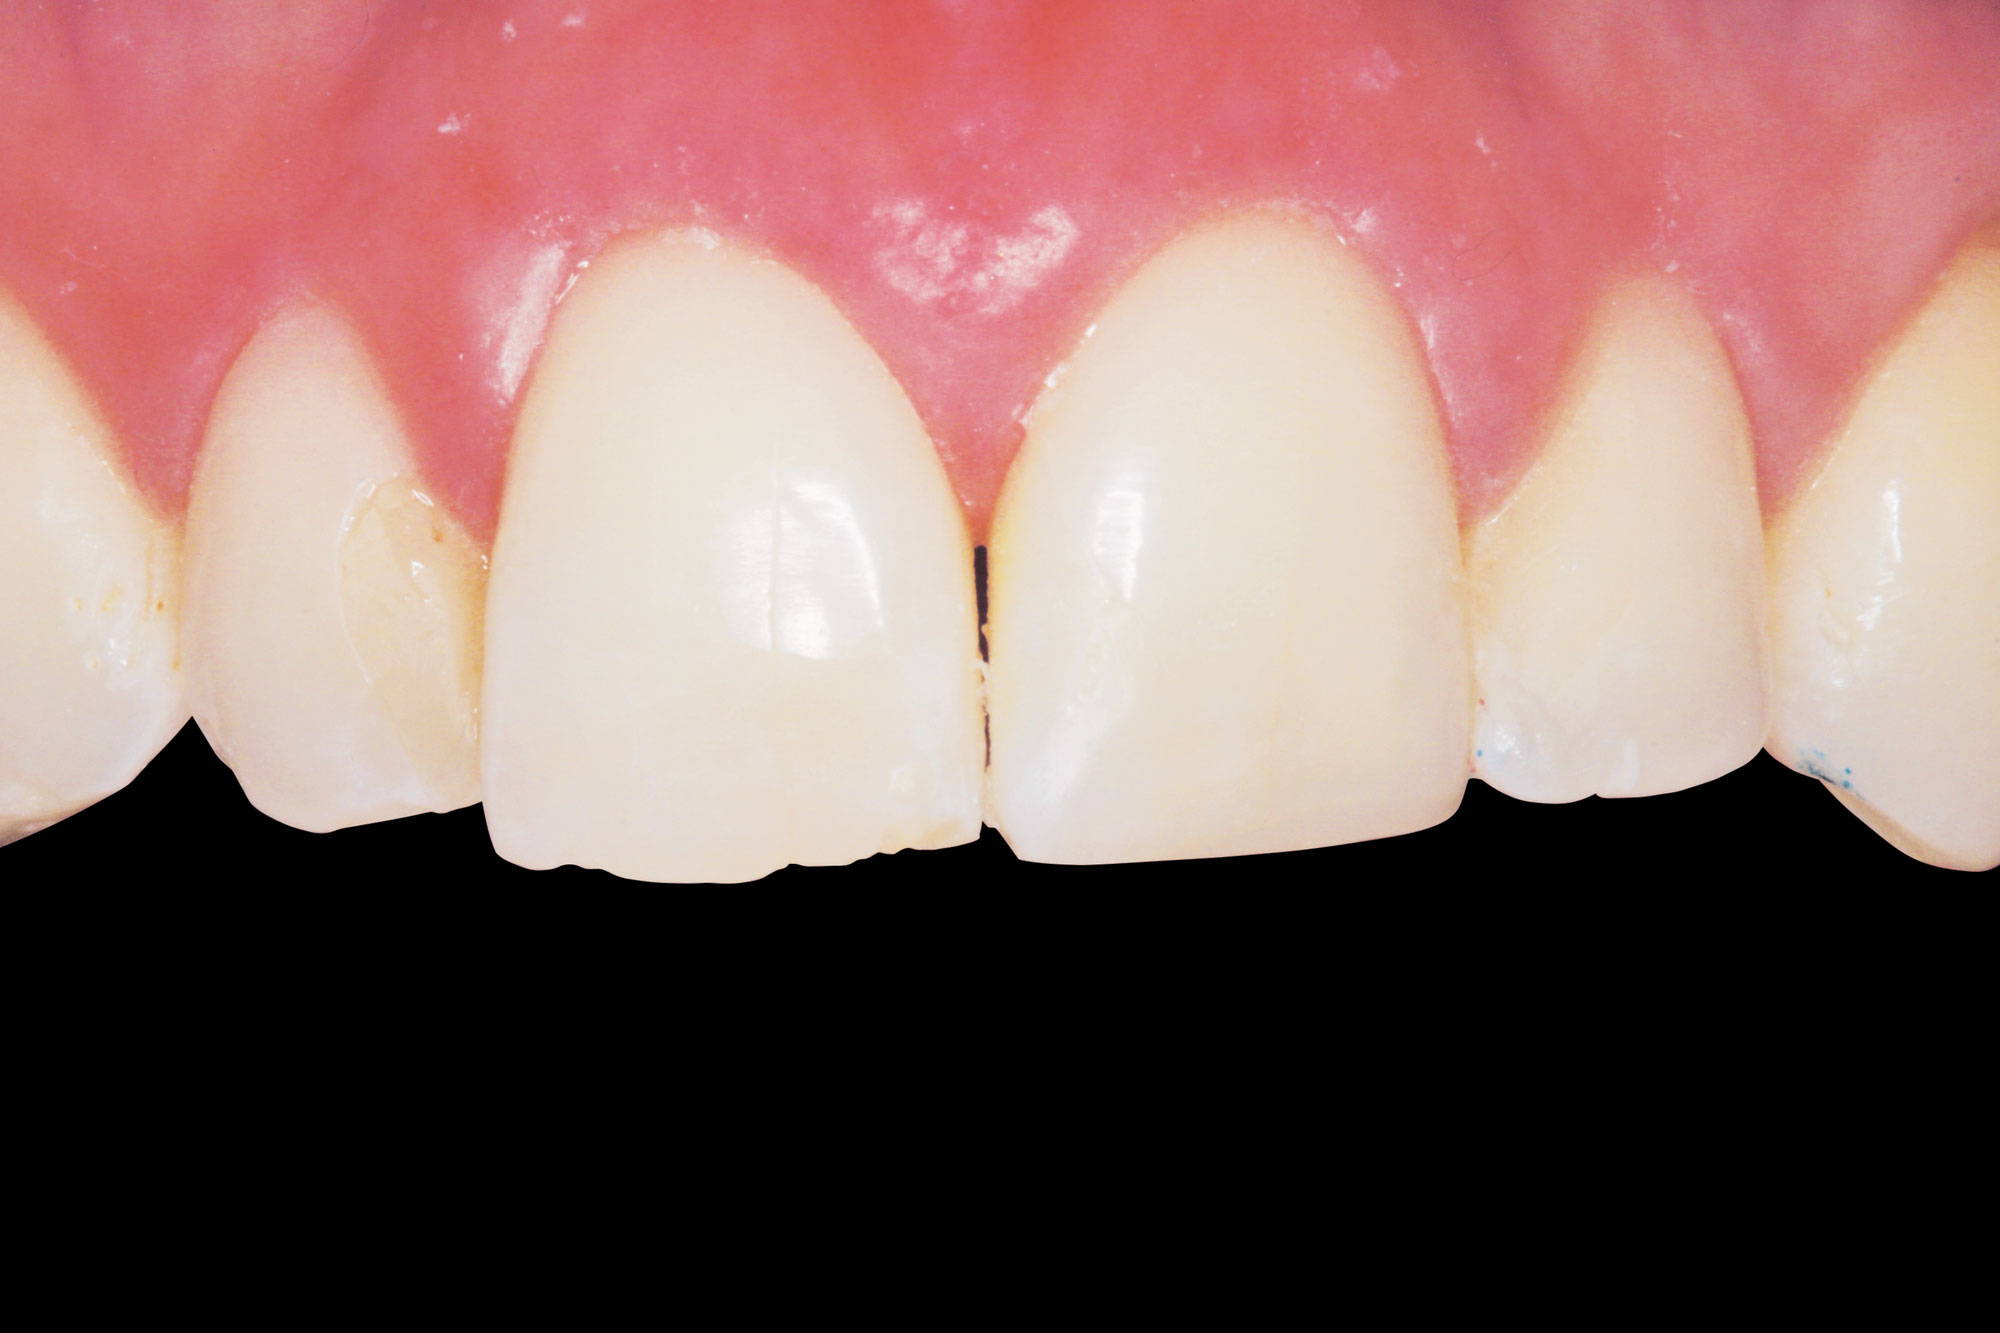 upper teeth before restoration in black background